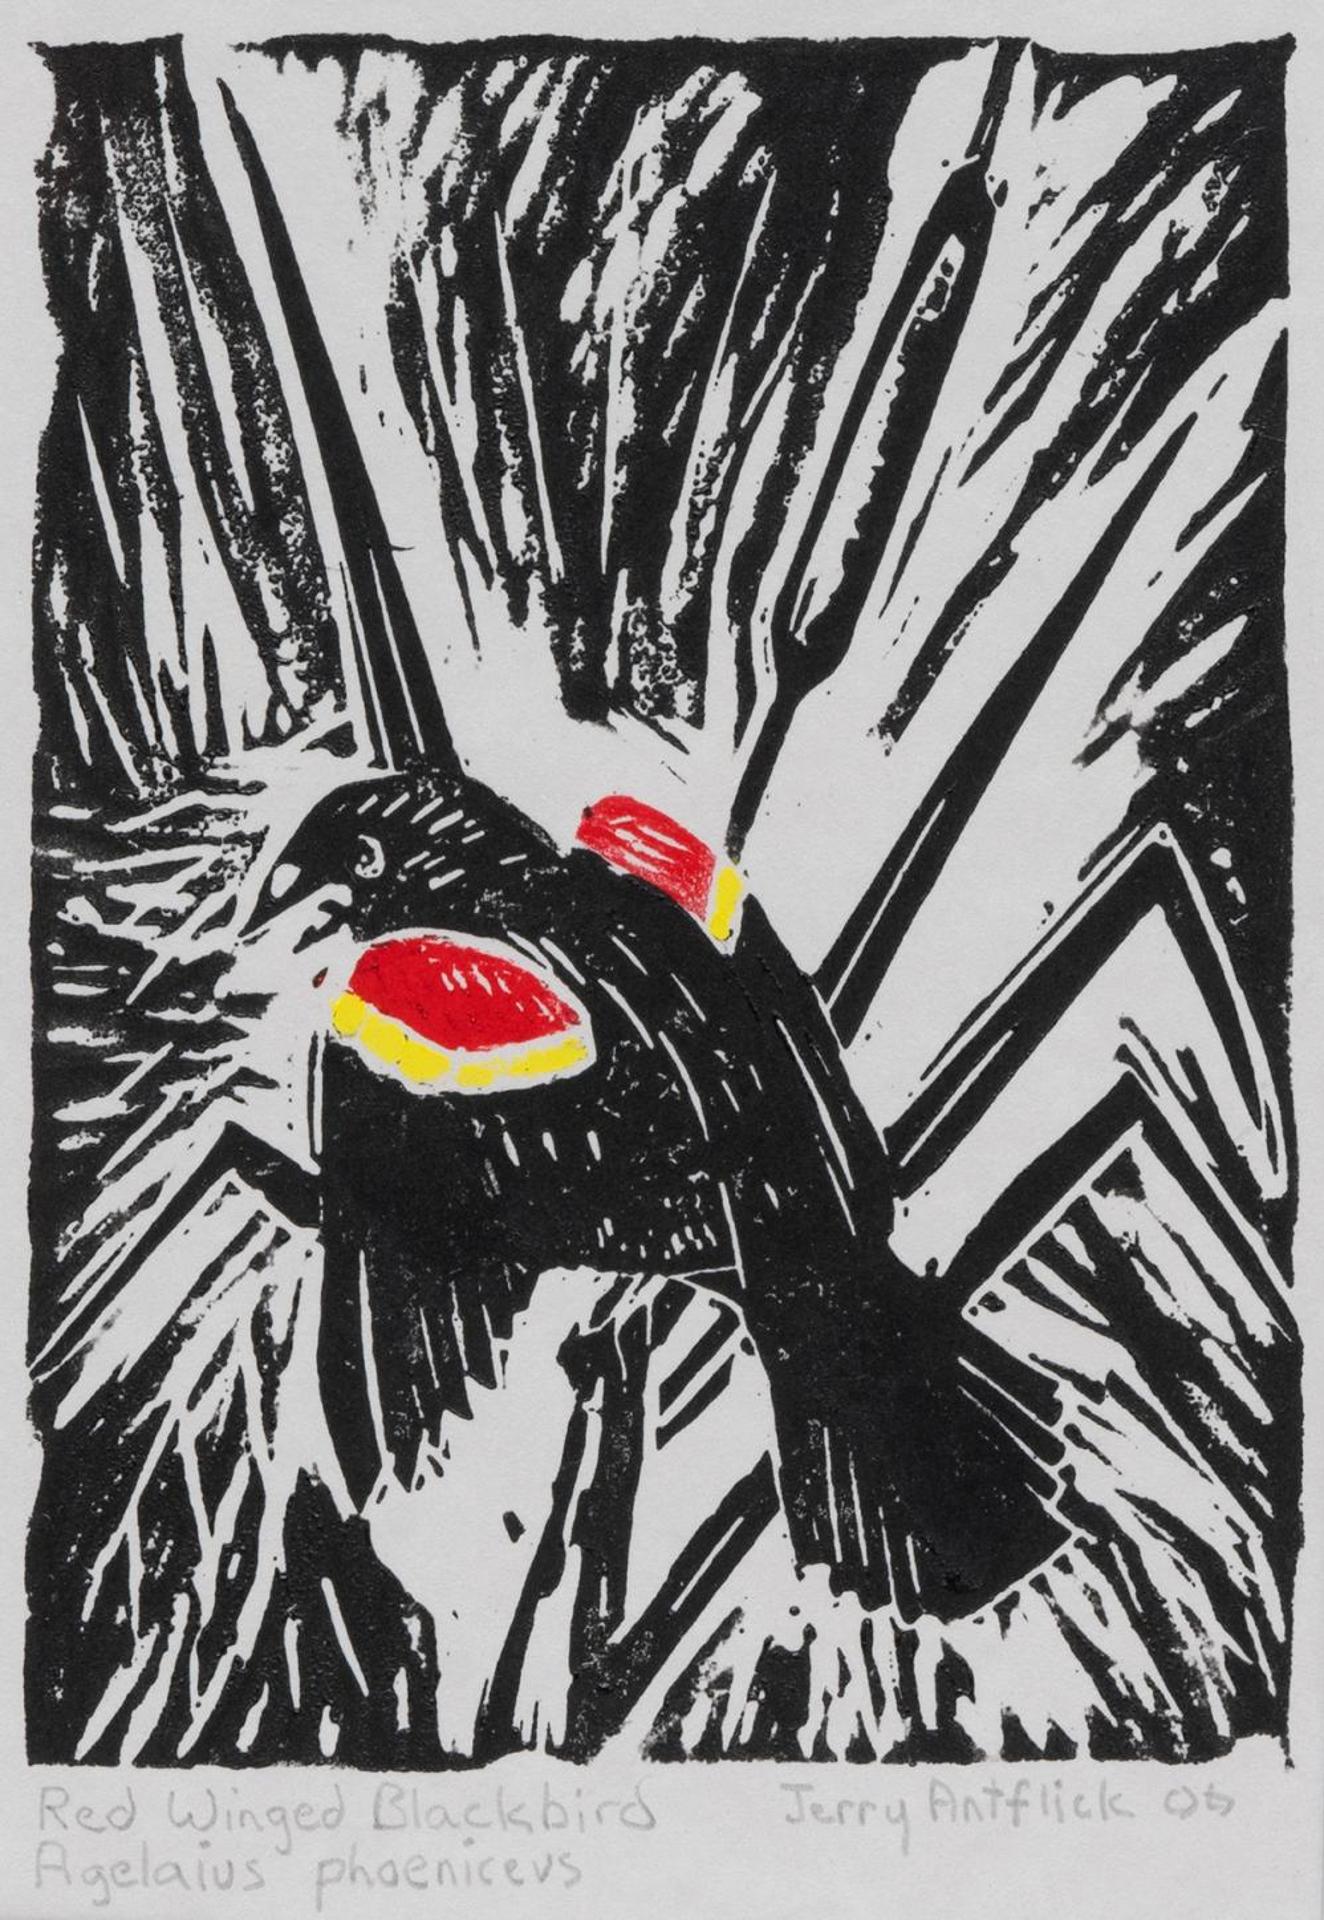 Jerry Antflick - Red Winged Blackbird